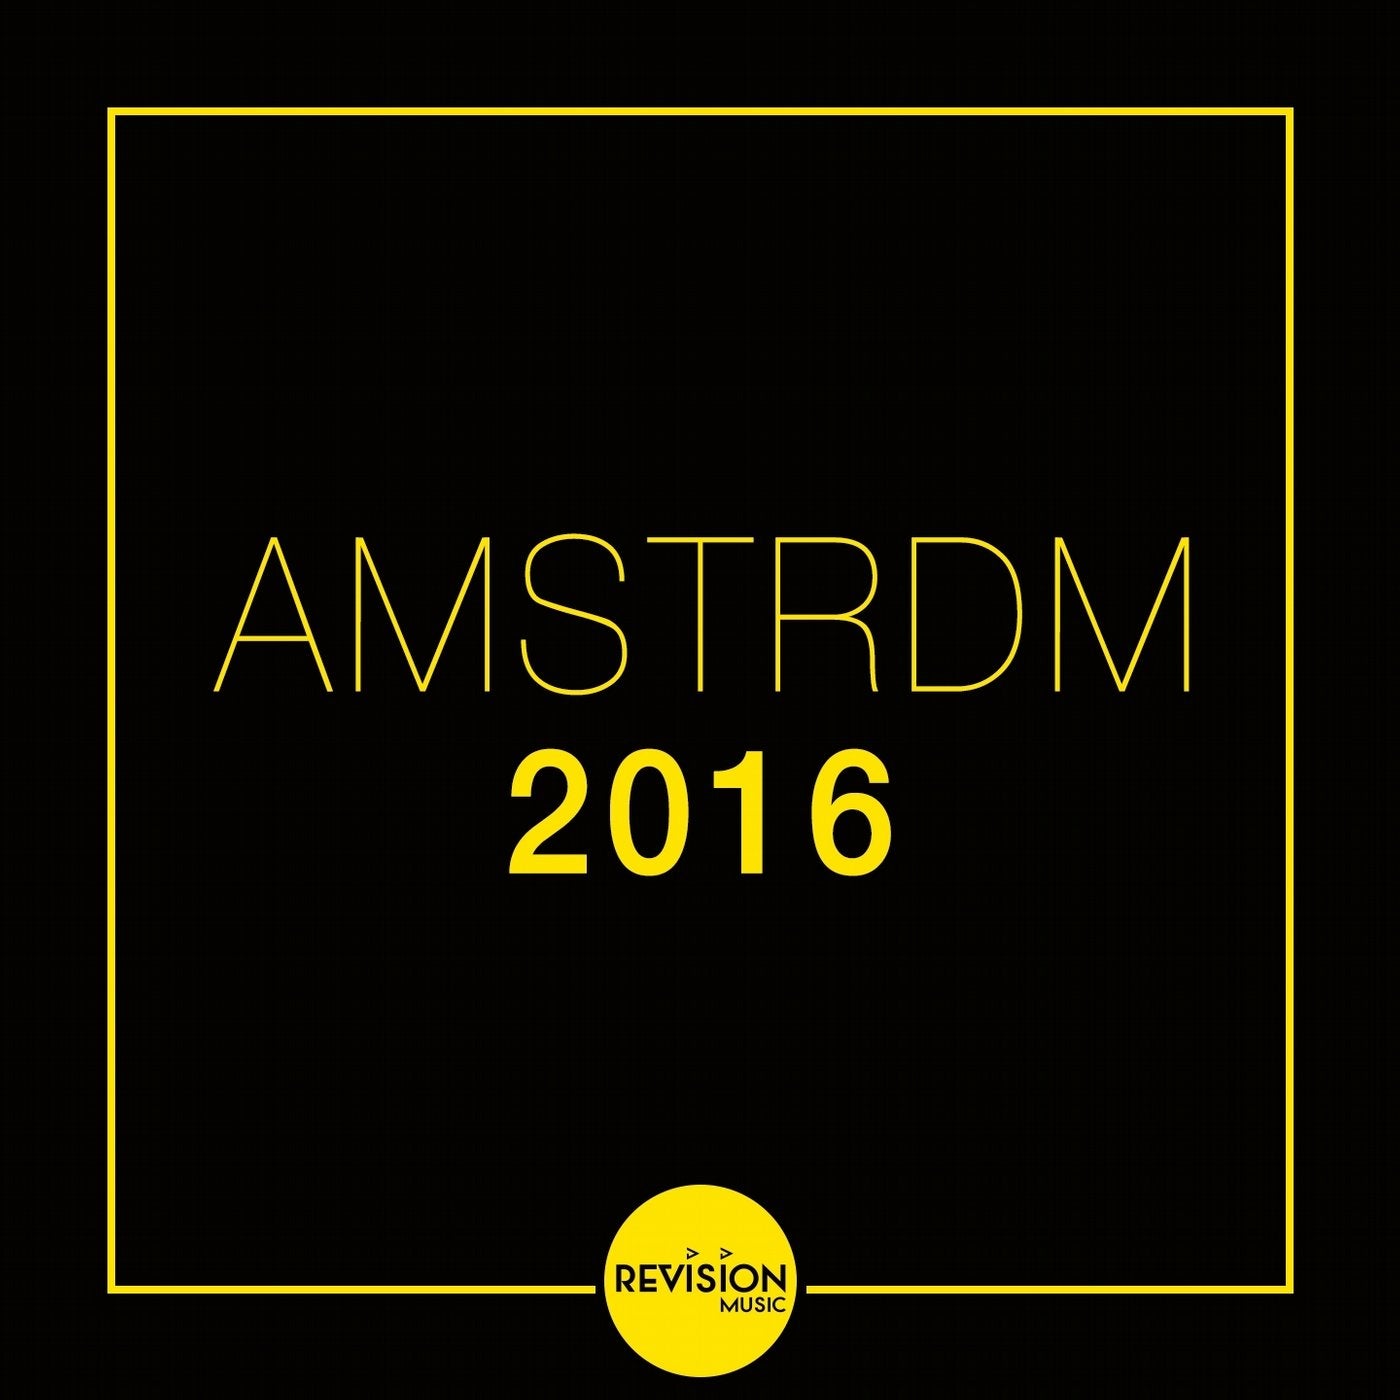 Amstrdm 2016